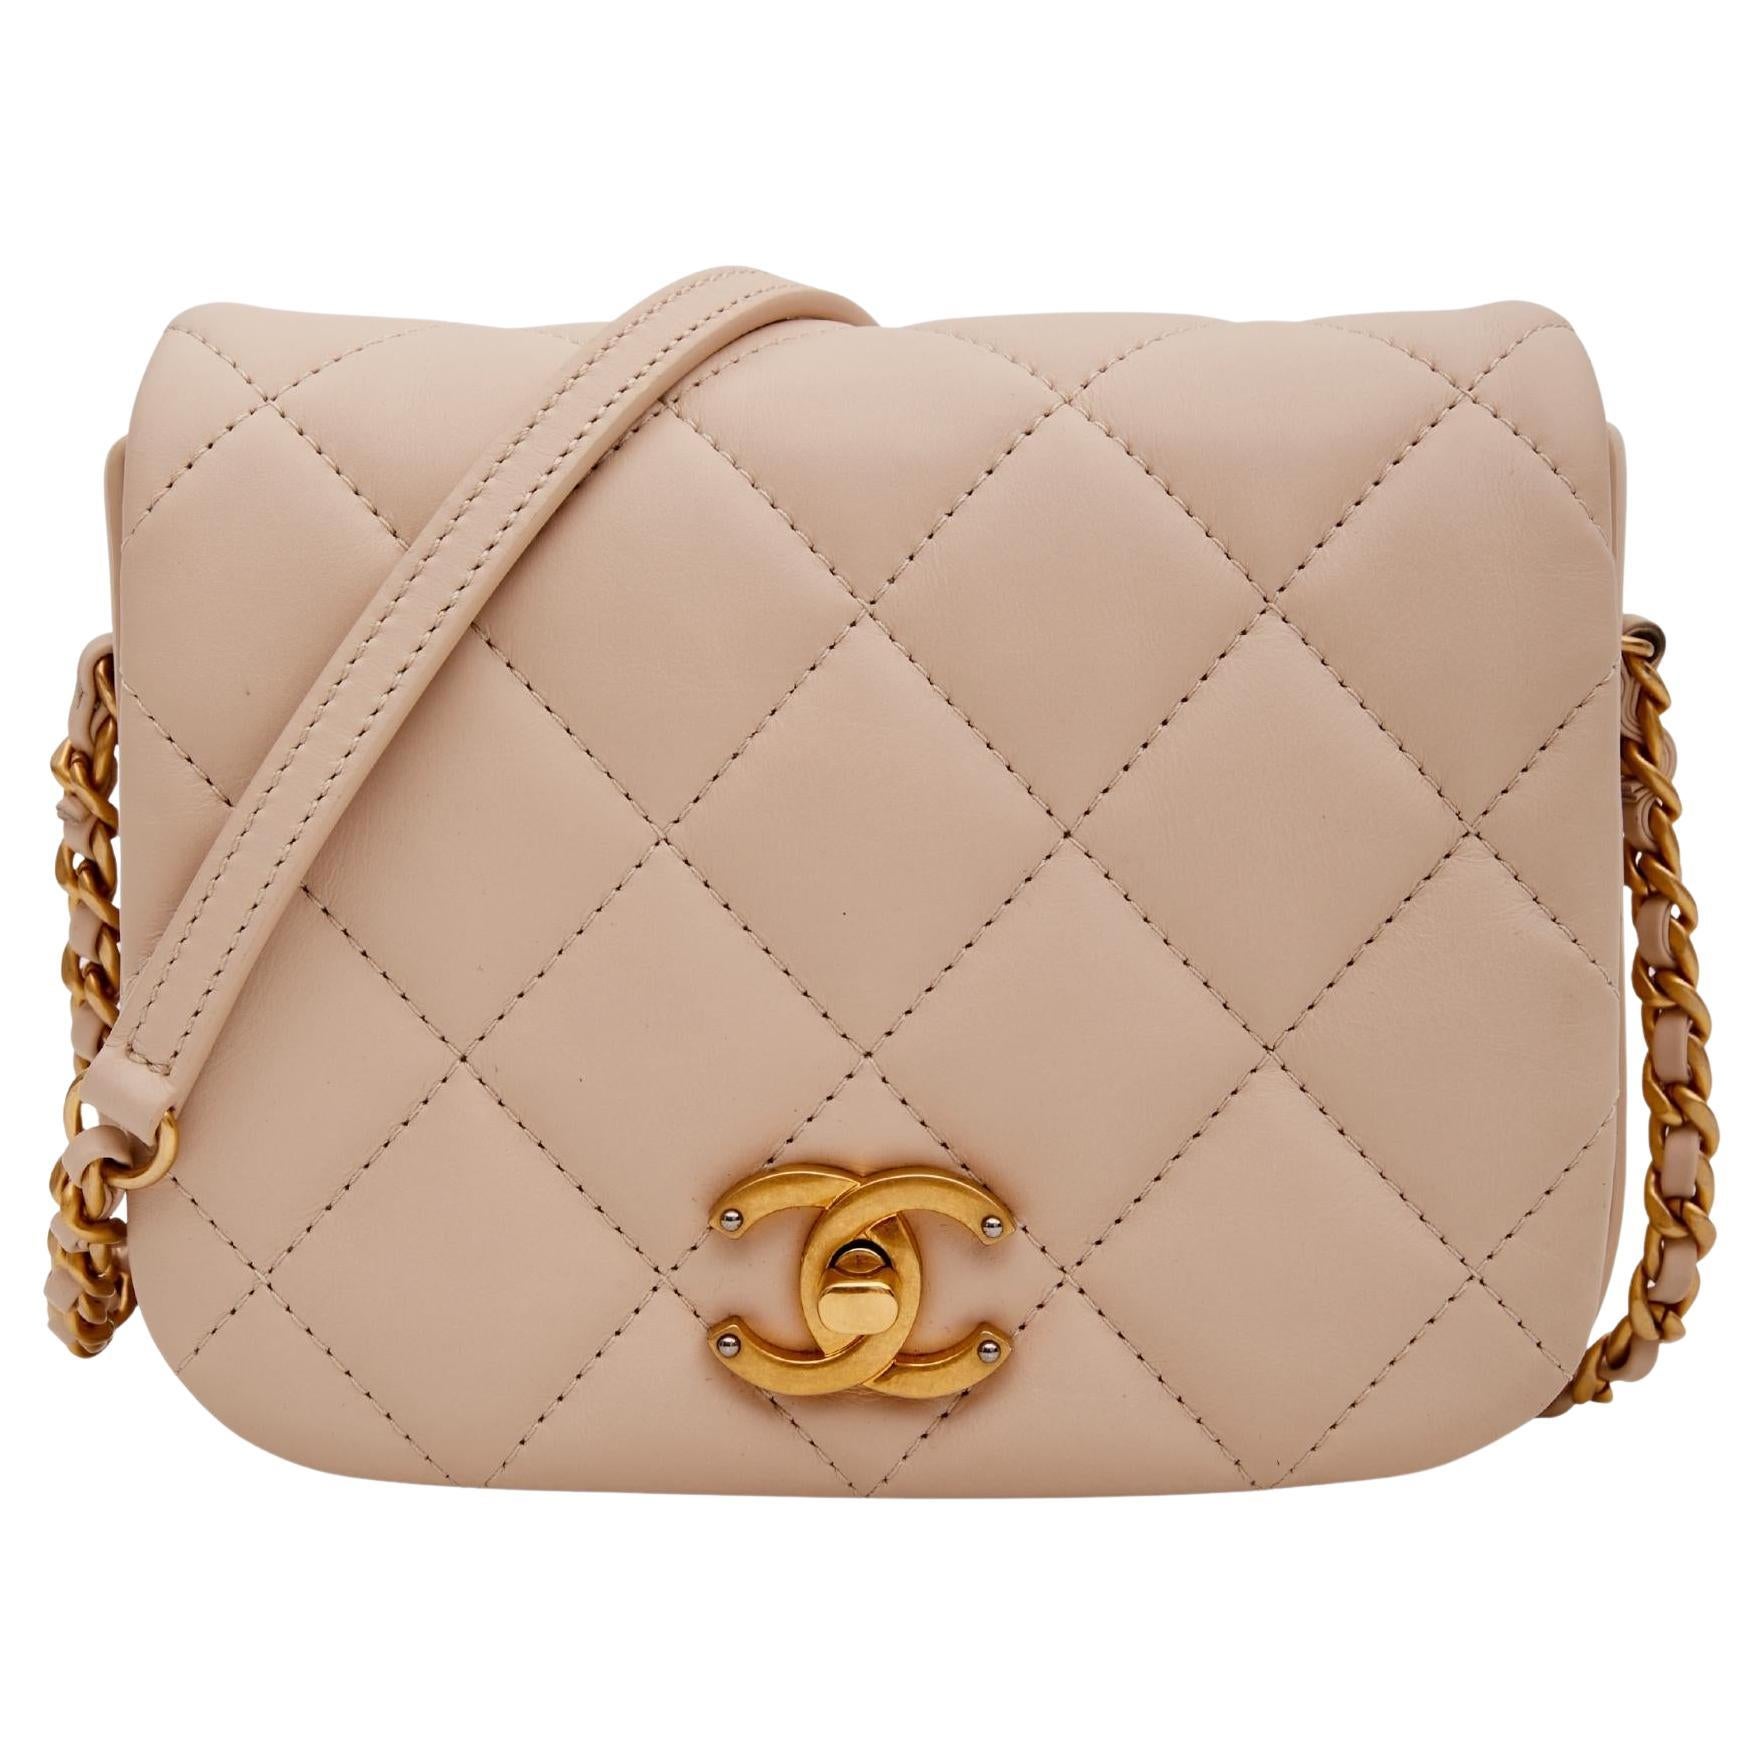 Chanel - Mini sac à rabat taupe Fashion Therapy 2020